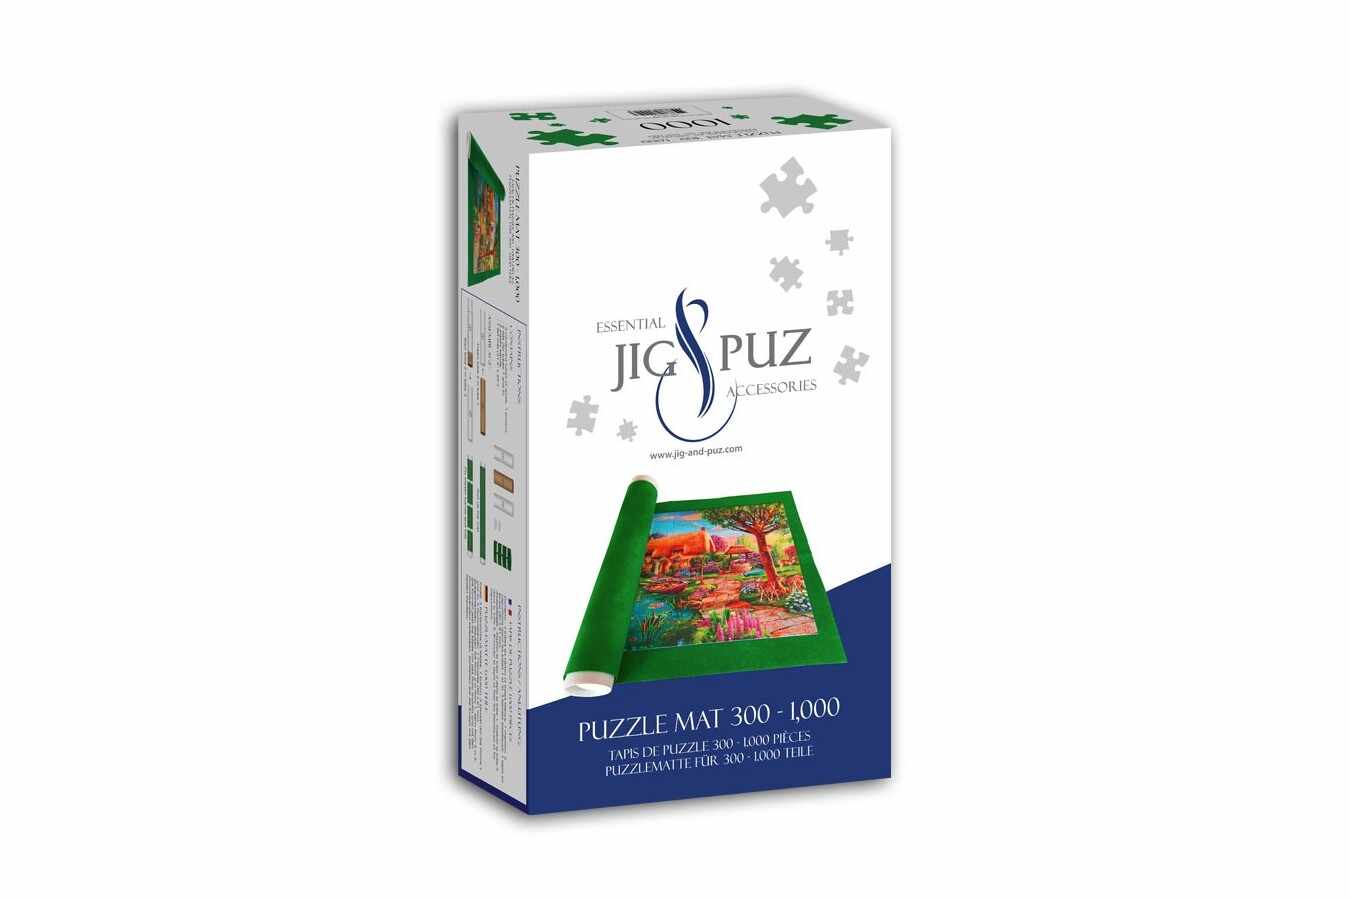 Covor pentru puzzle Jig & Puz 300-1000 piese